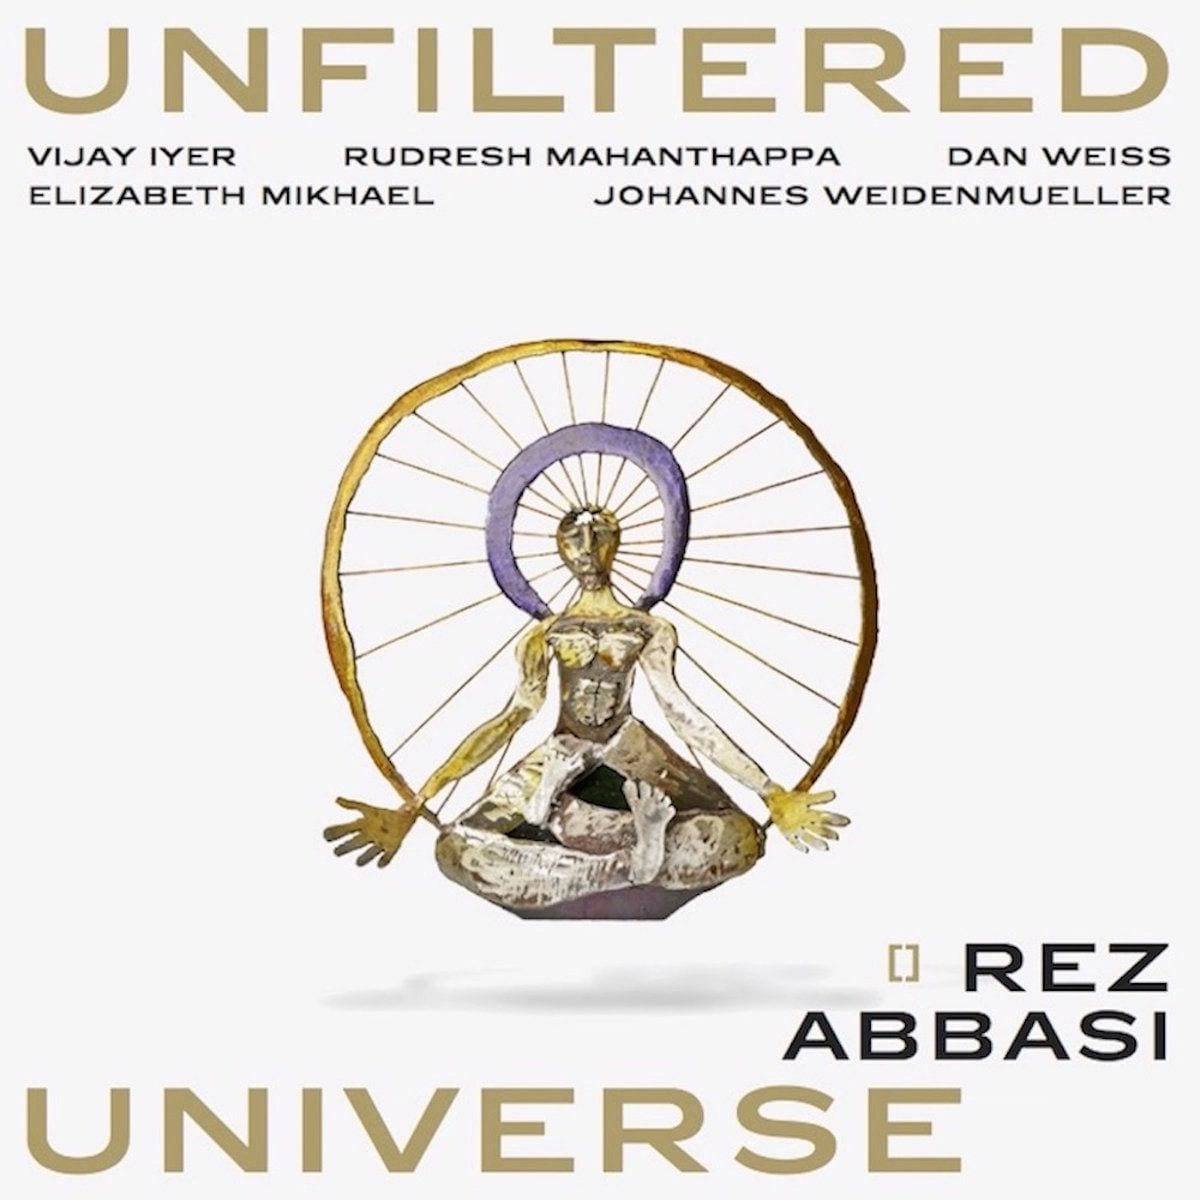 rez-abbasi-unfiltered-universe